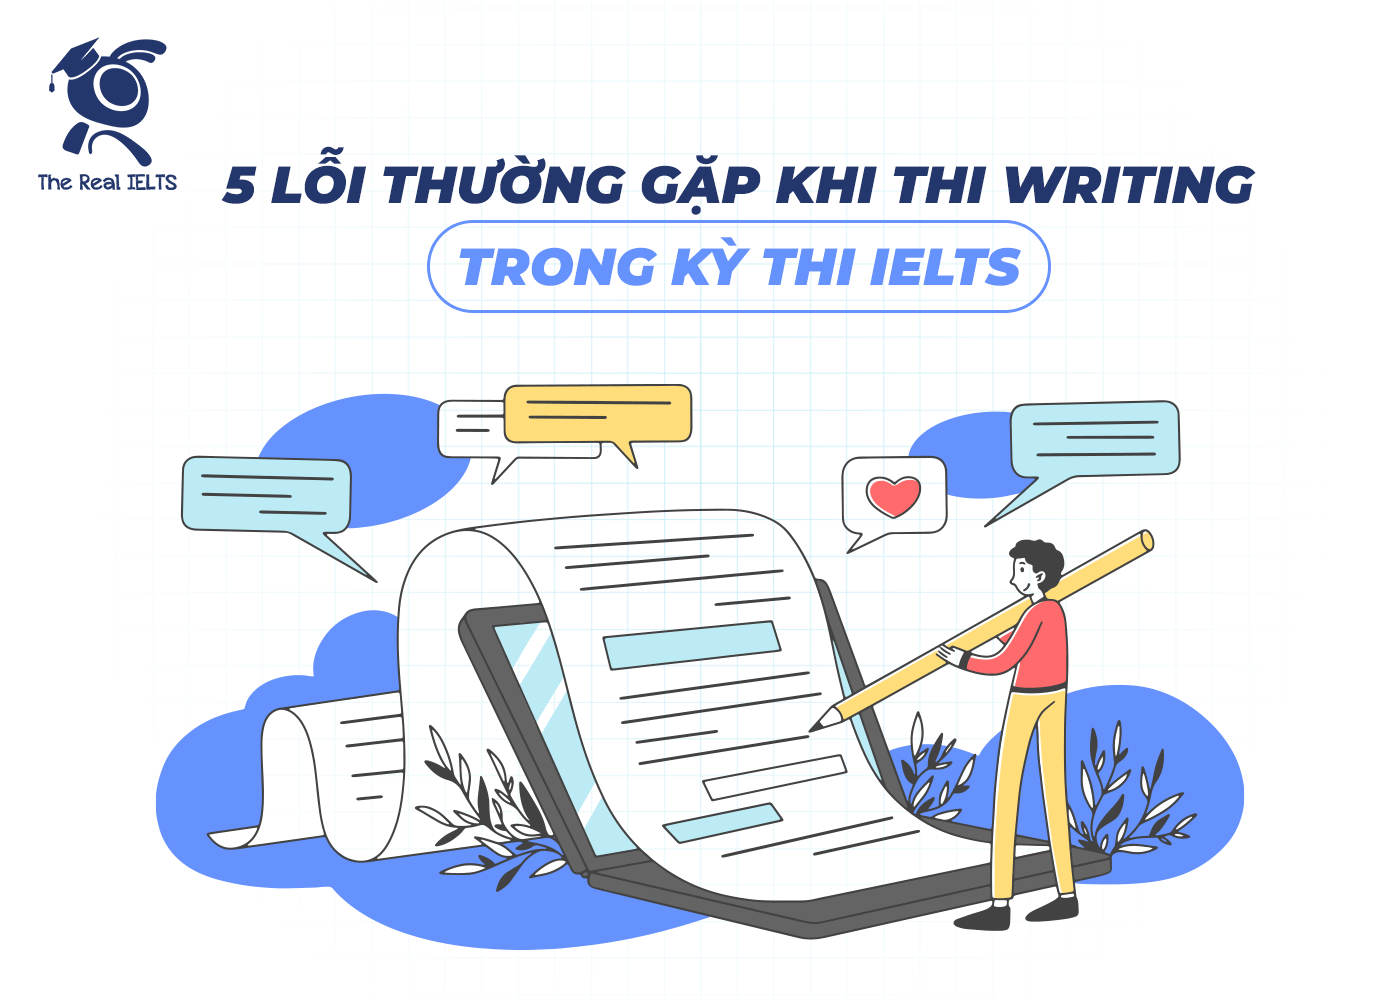 thi-writing-5-loi-thuong-gap-khi-thi-writing